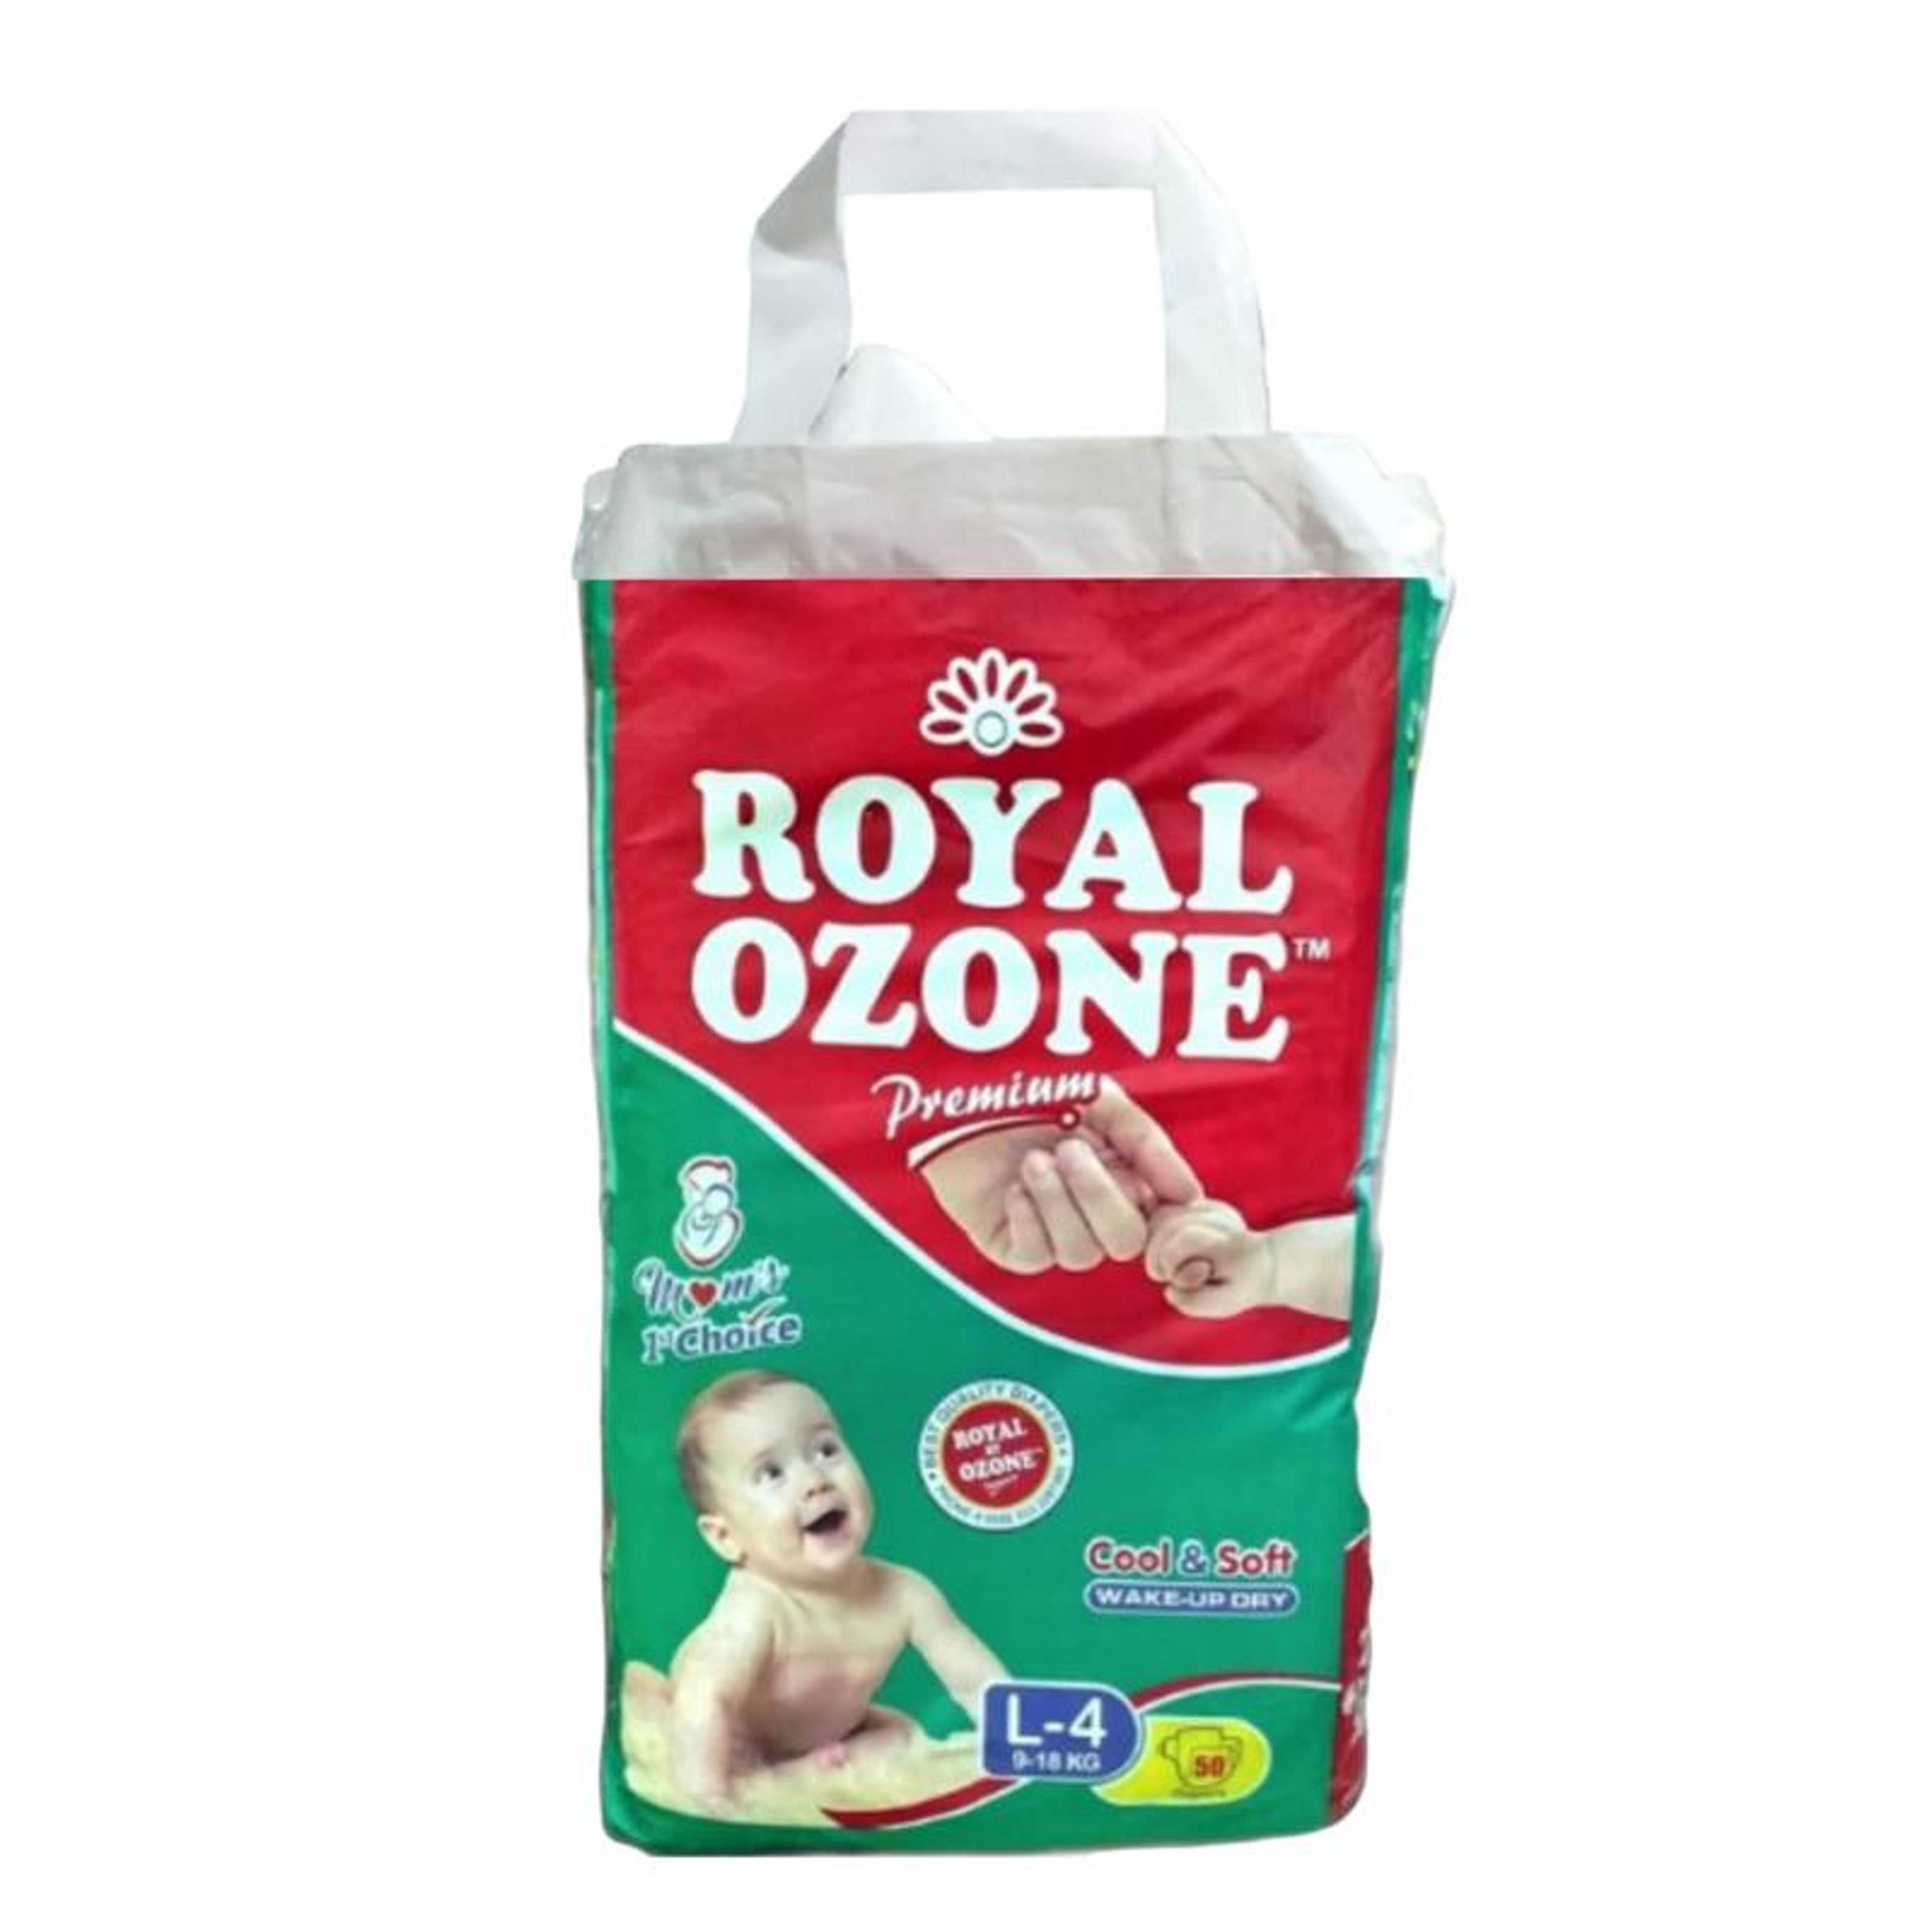 ROYAL Ozone Baby Diaper - Large Size 4 (50pcs)